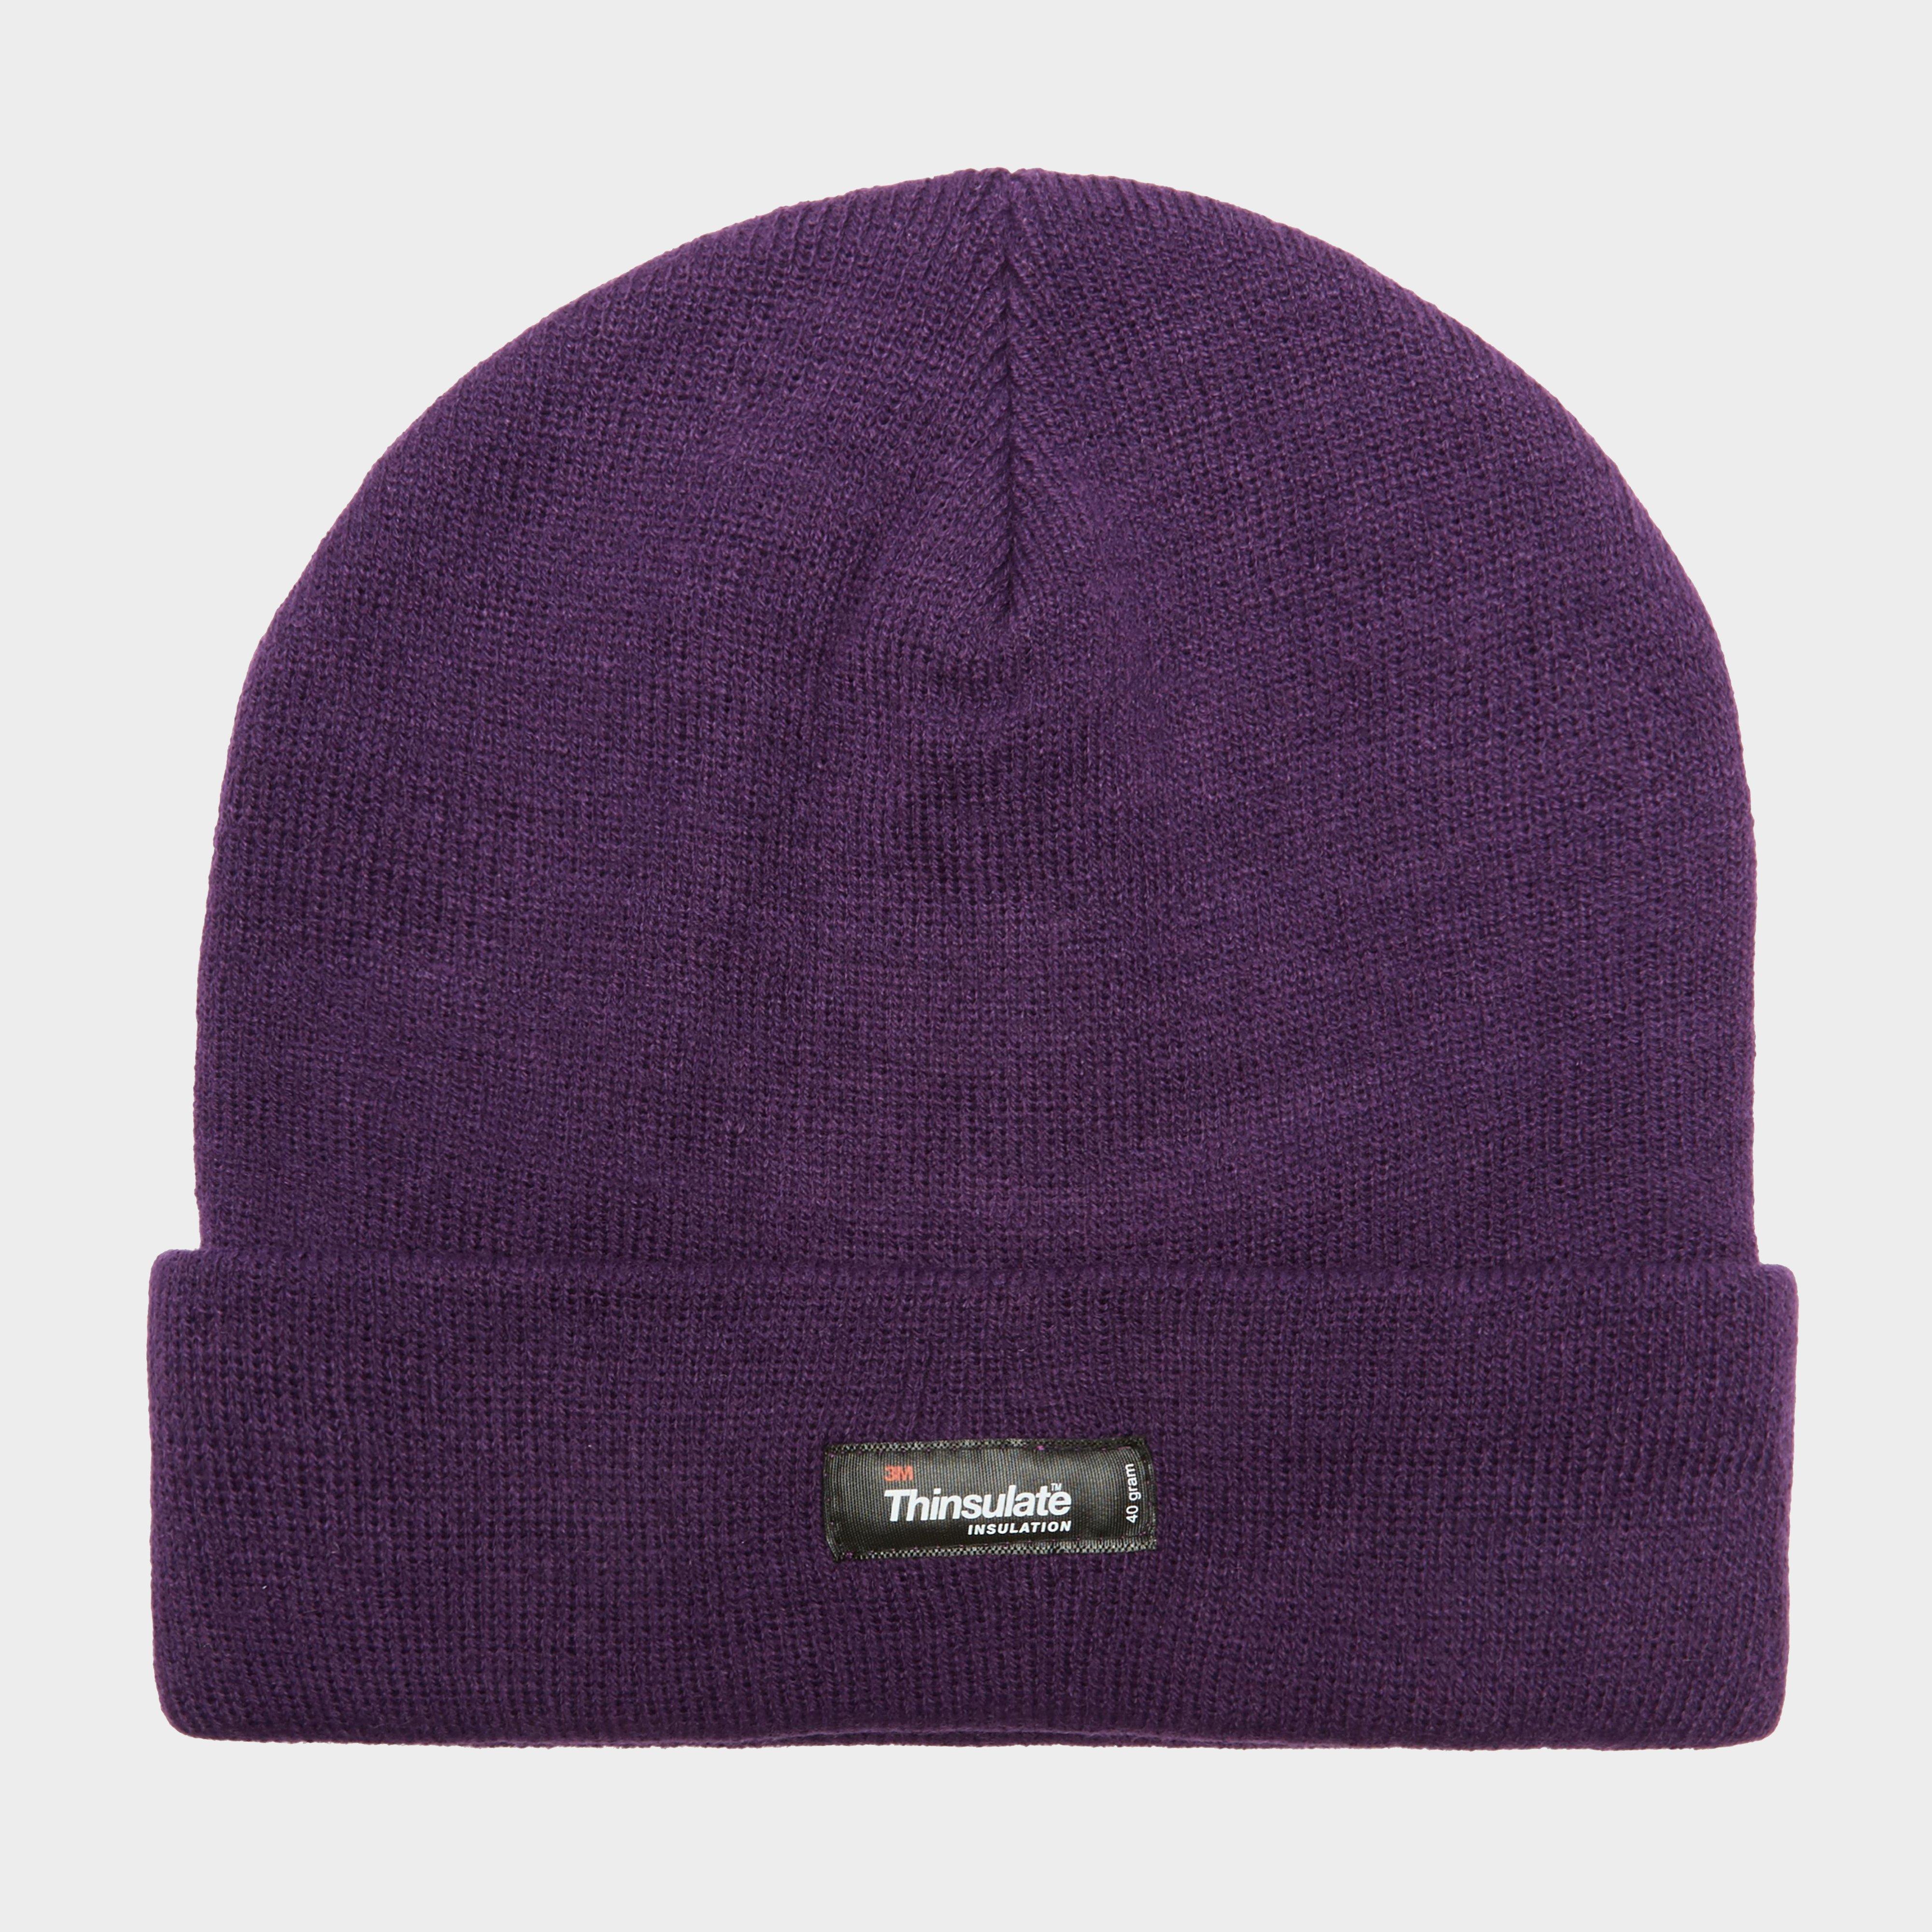 Peter Storm Unisex Thinsulate Beanie Hat  Purple